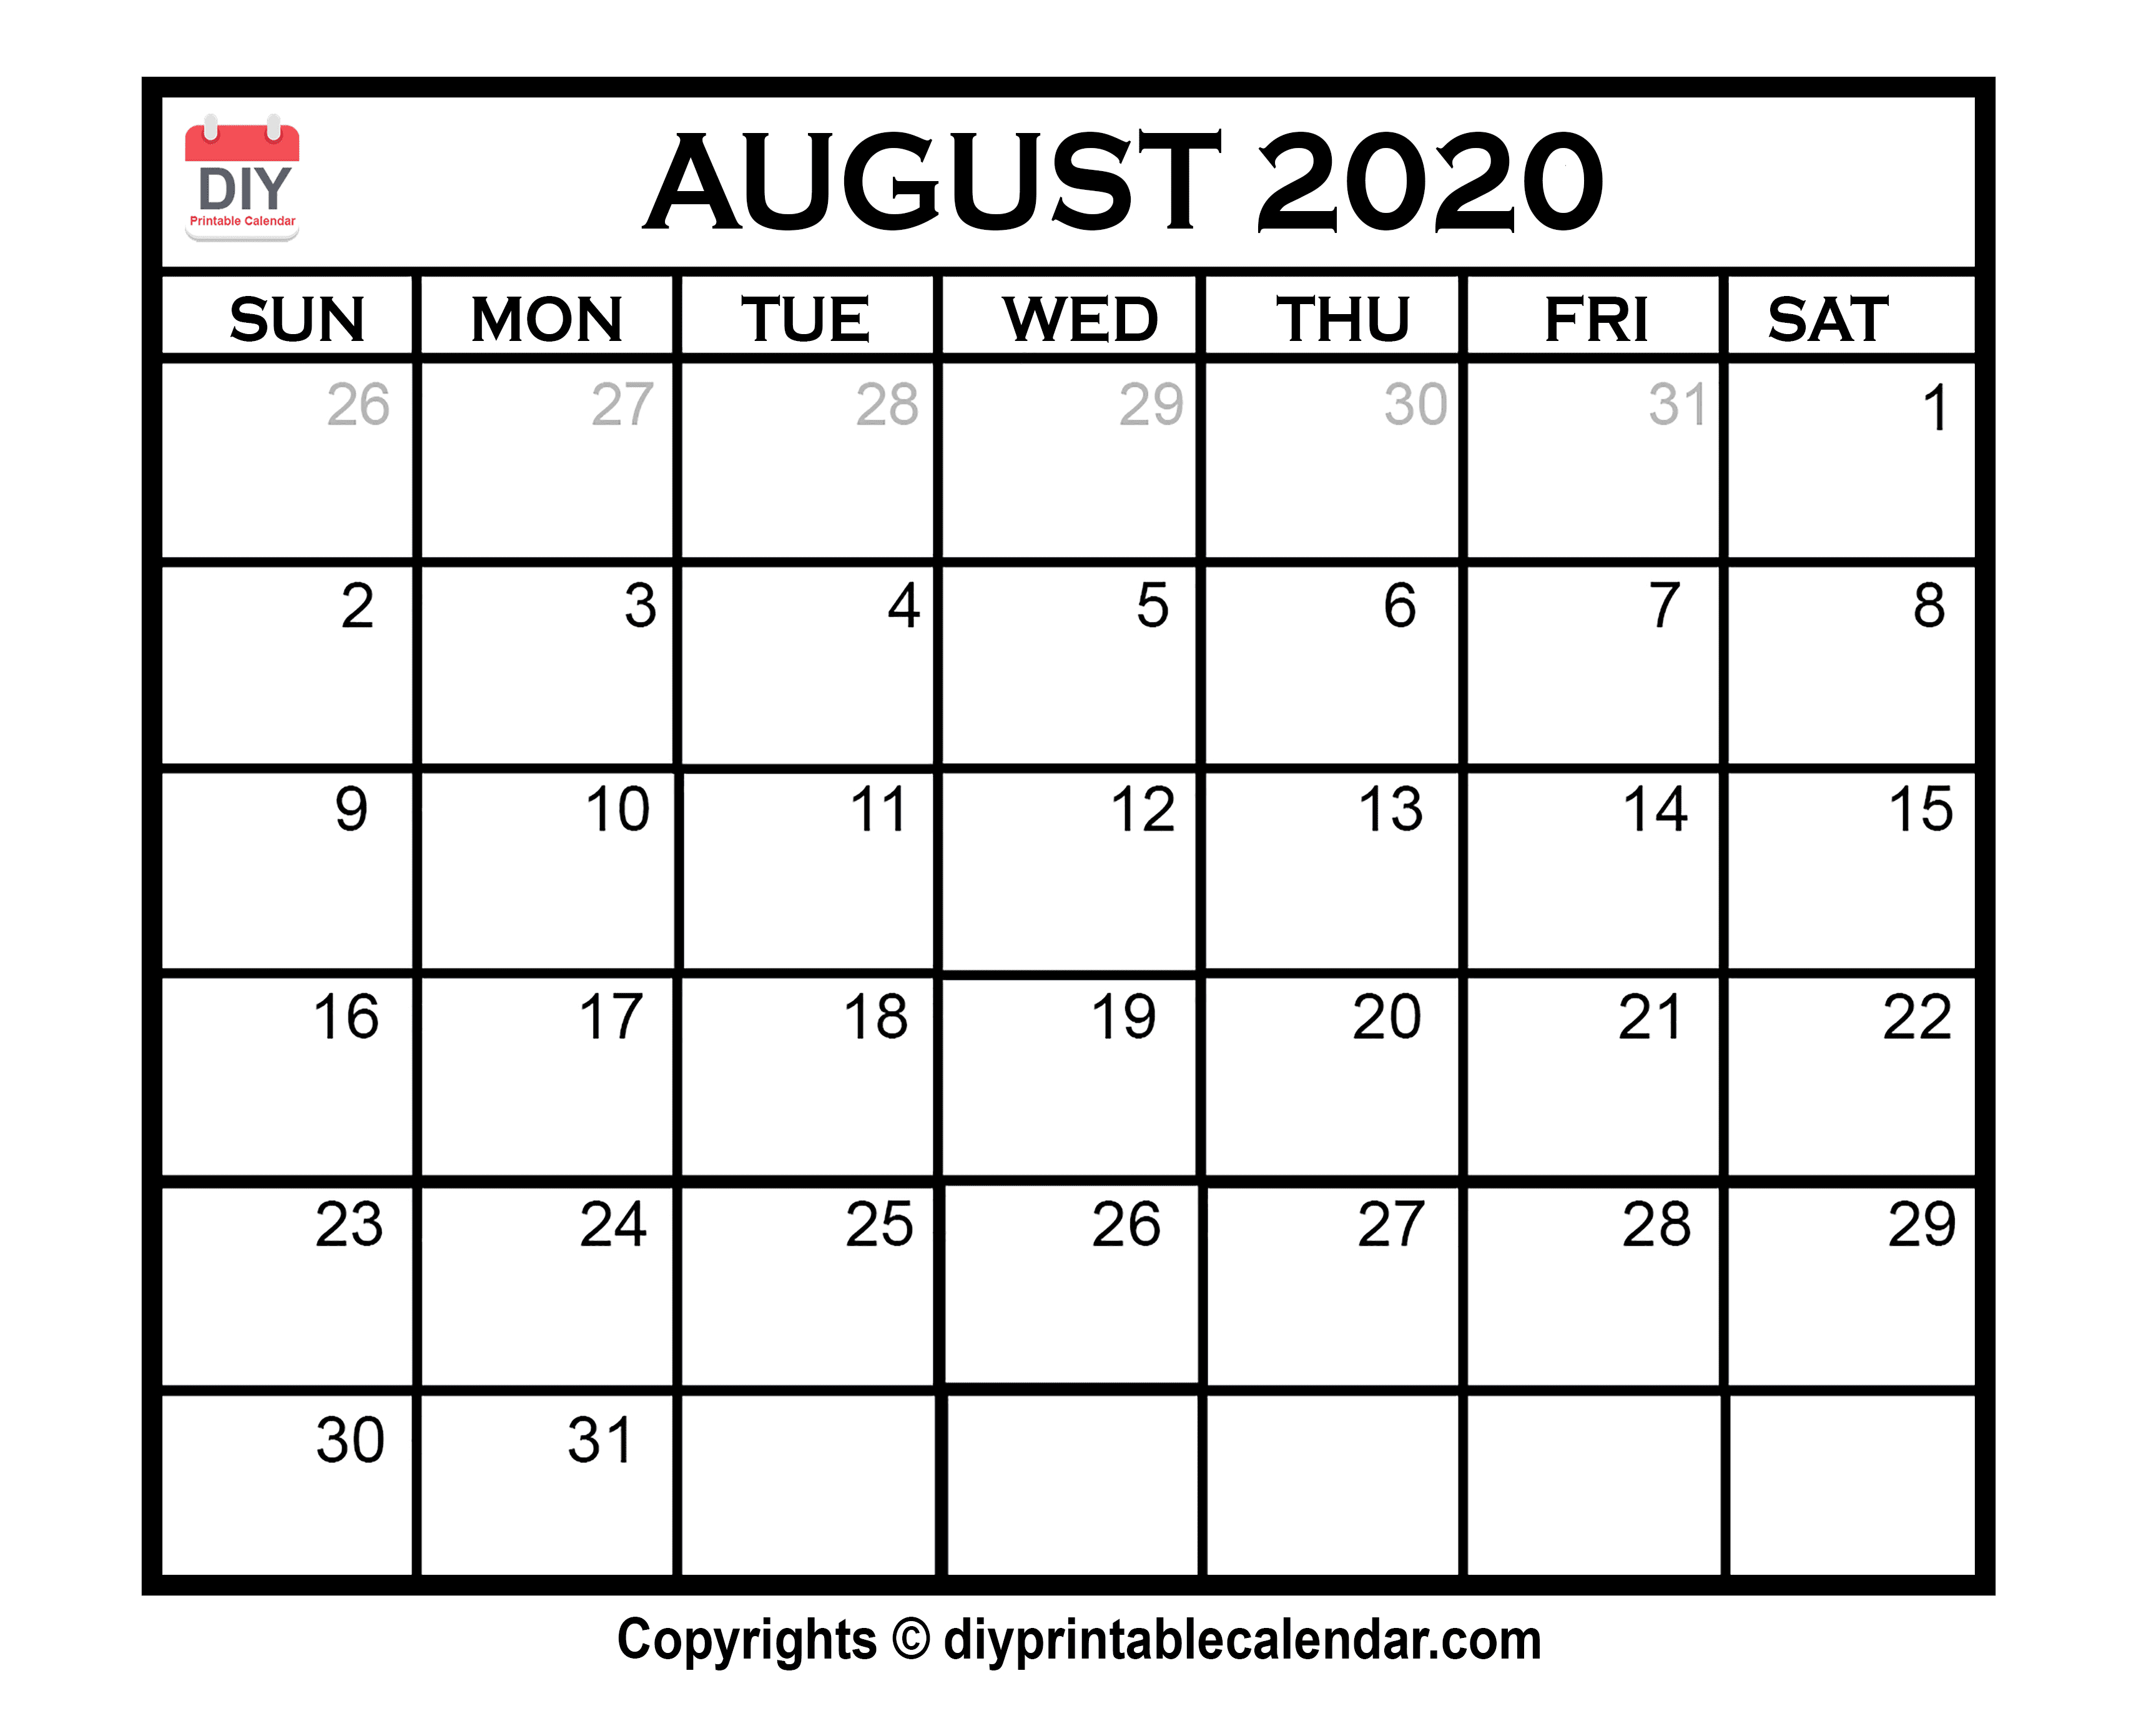 Printable Calendar Aug 2020 - Wpa.wpart.co